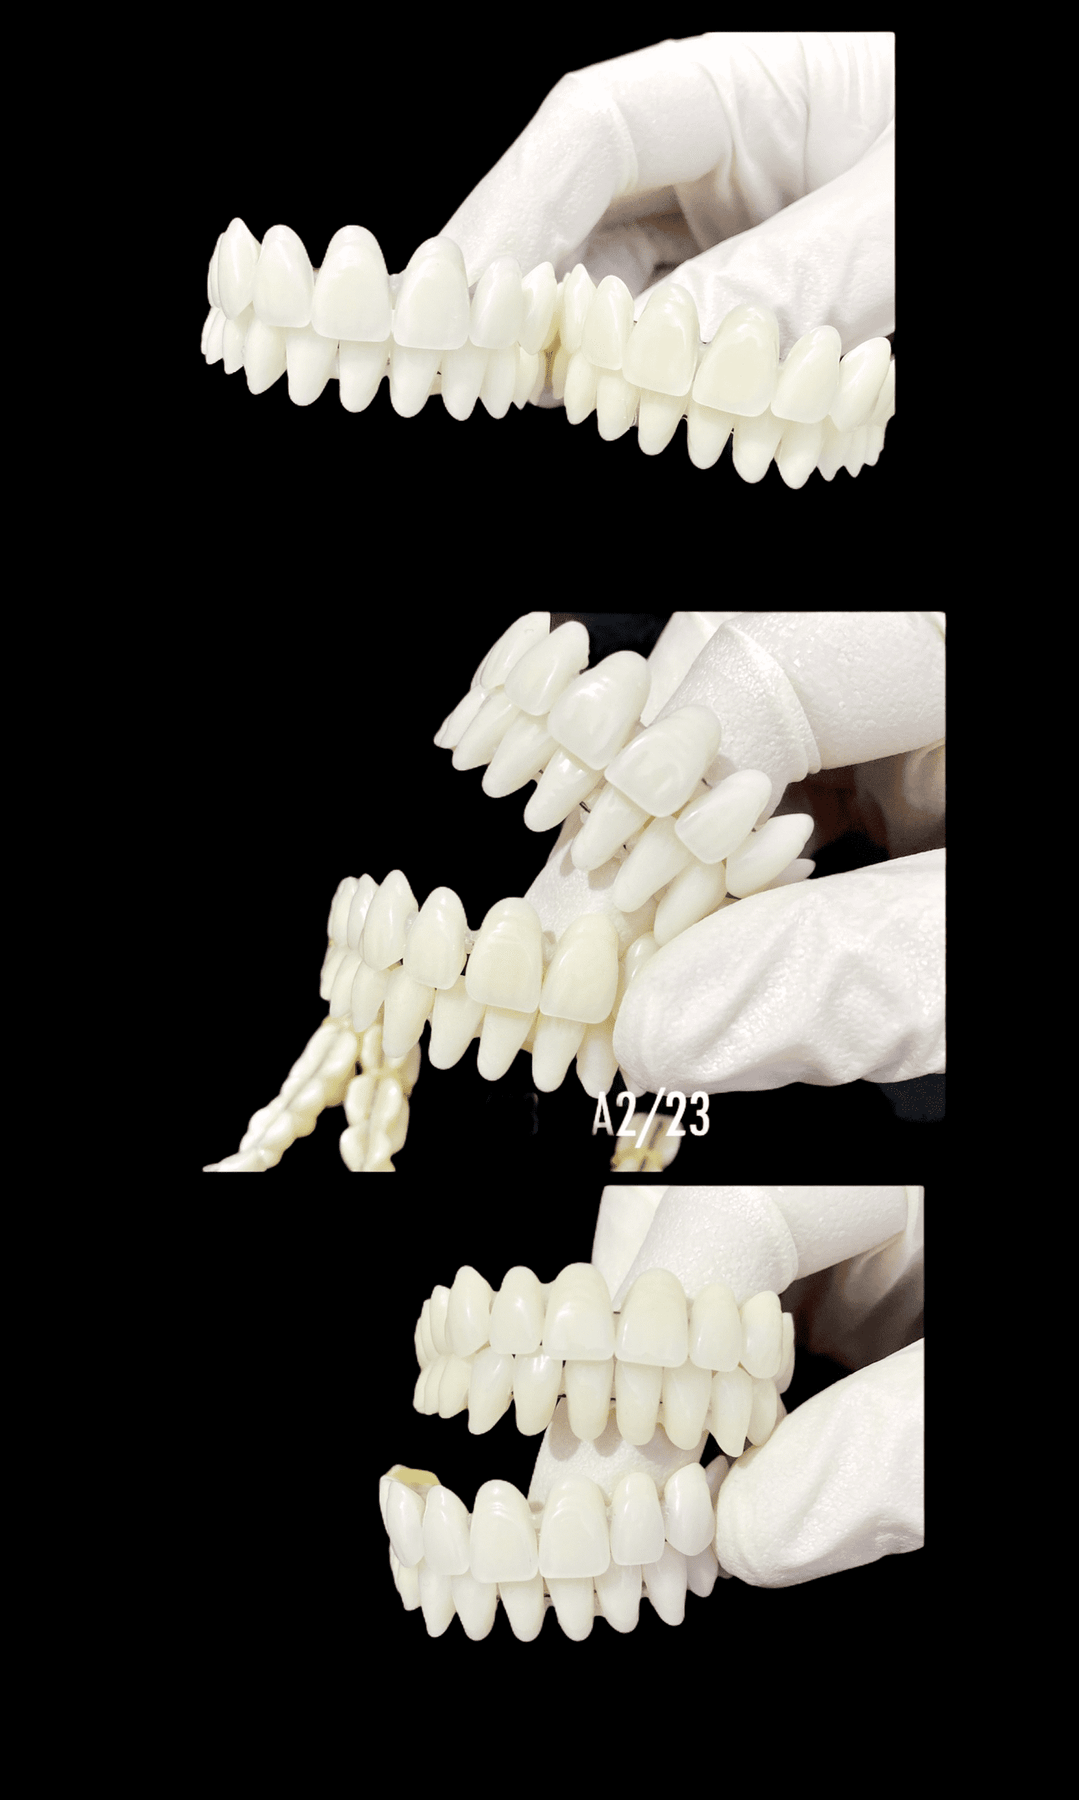 DIY DENTURE KIT Custom Homemade Dentures Dental Resin Denture False Teeth - AbuMaizar  Dental Roots Clinic